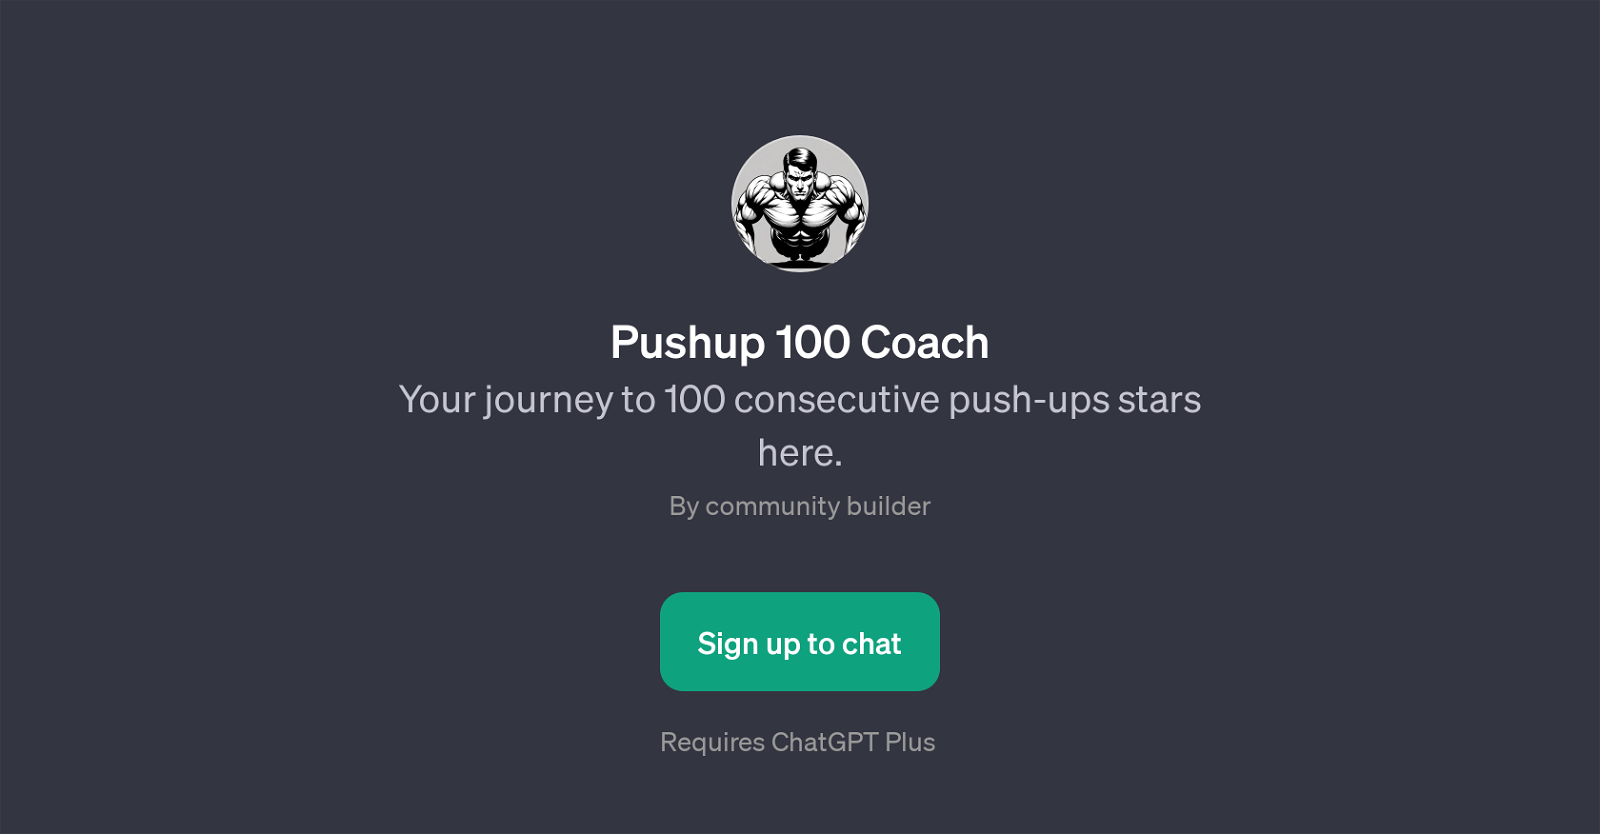 Pushup 100 Coach website